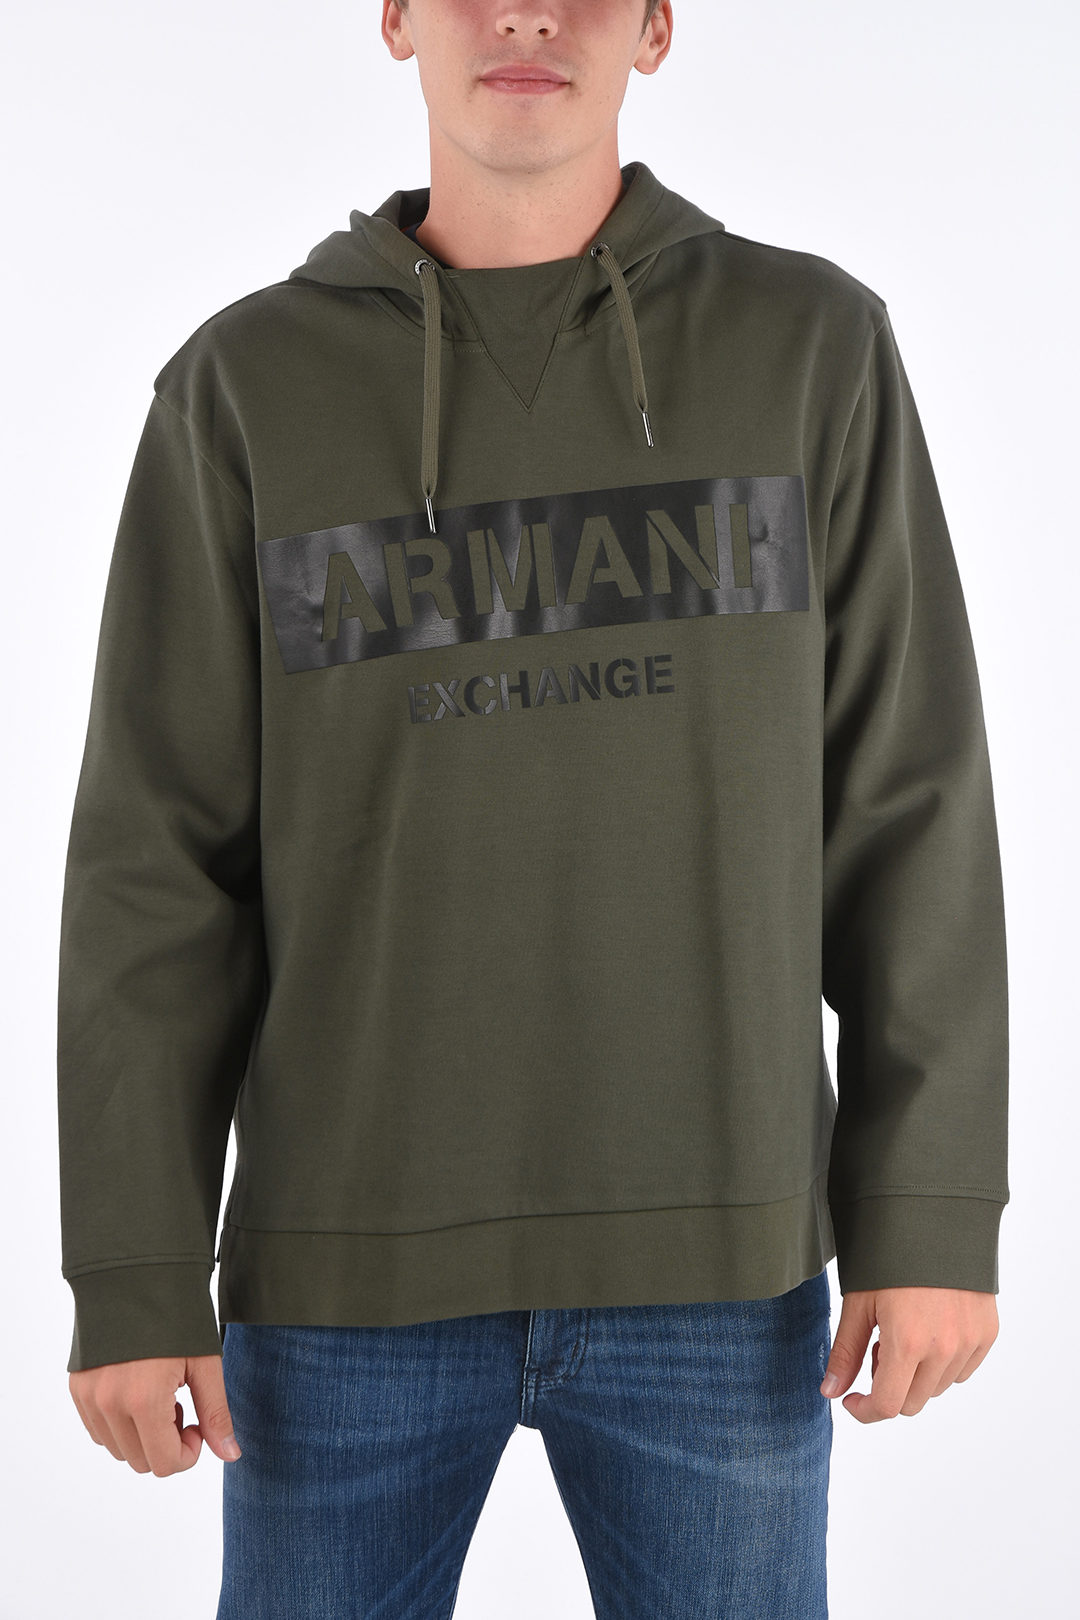 Armani ARMANI EXCHANGE printed hoodie sweatshirt men - Glamood Outlet